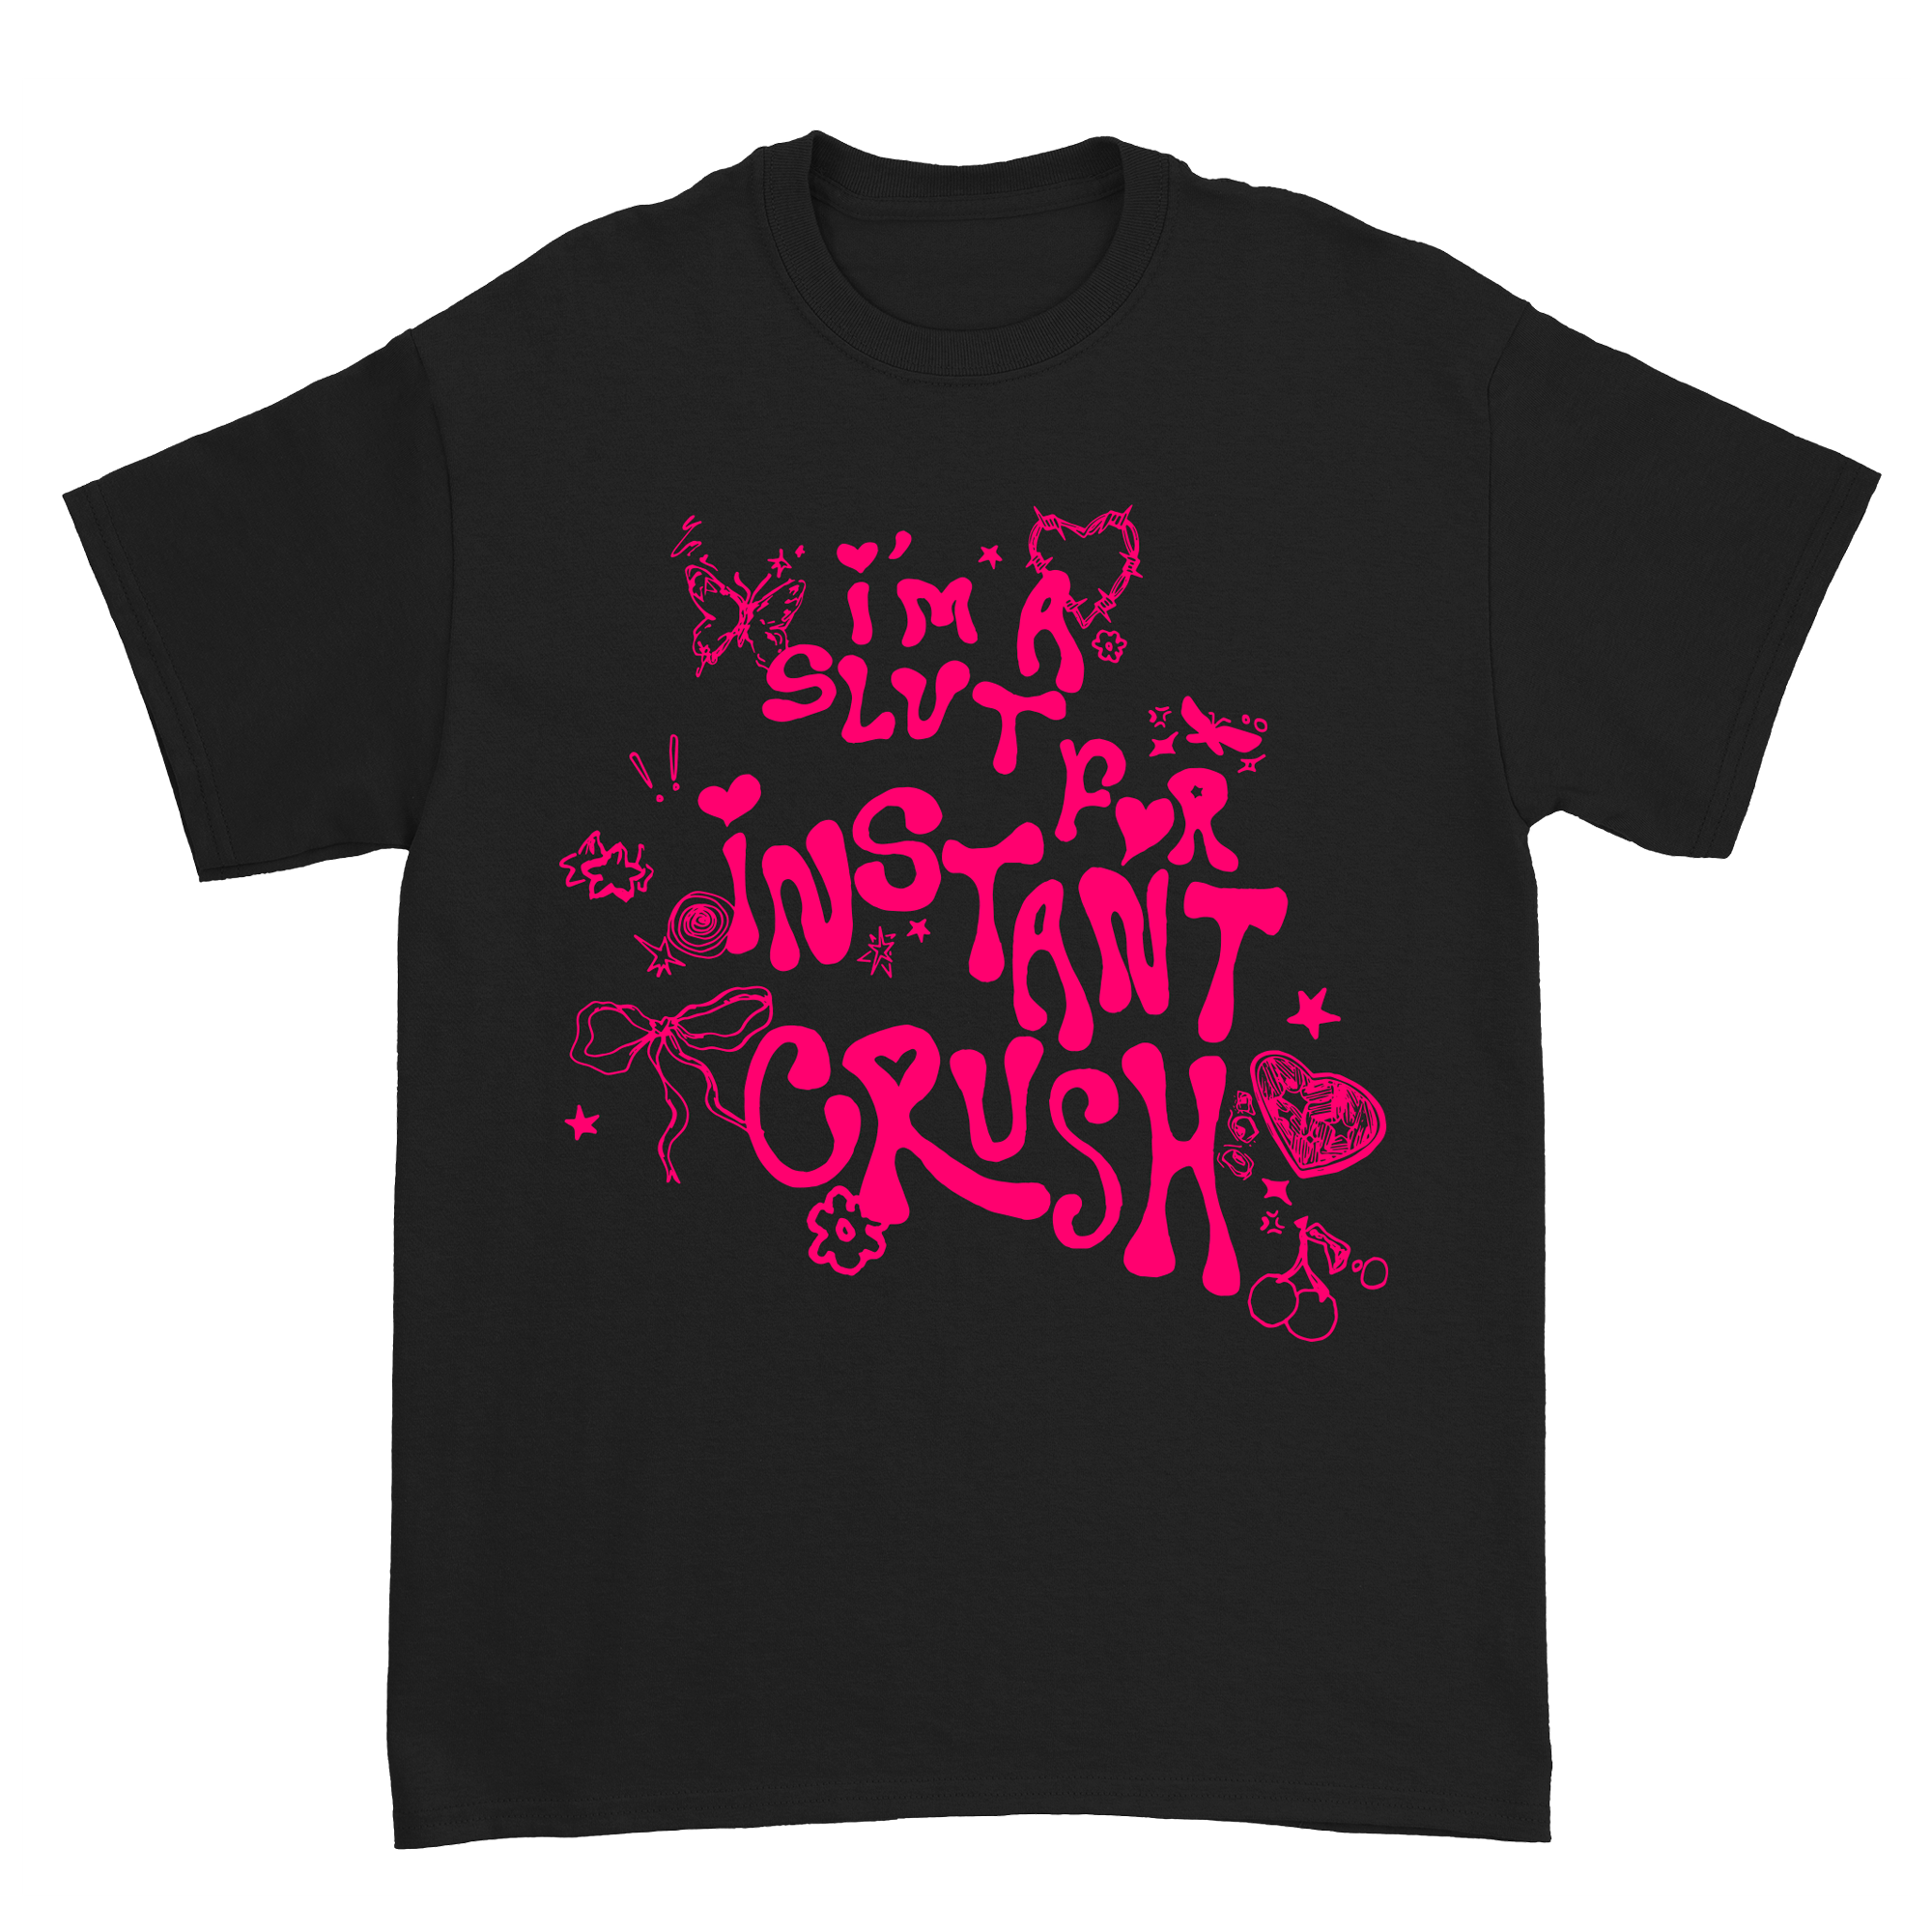 Instant Crush - Slut for Instant Crush T-Shirt